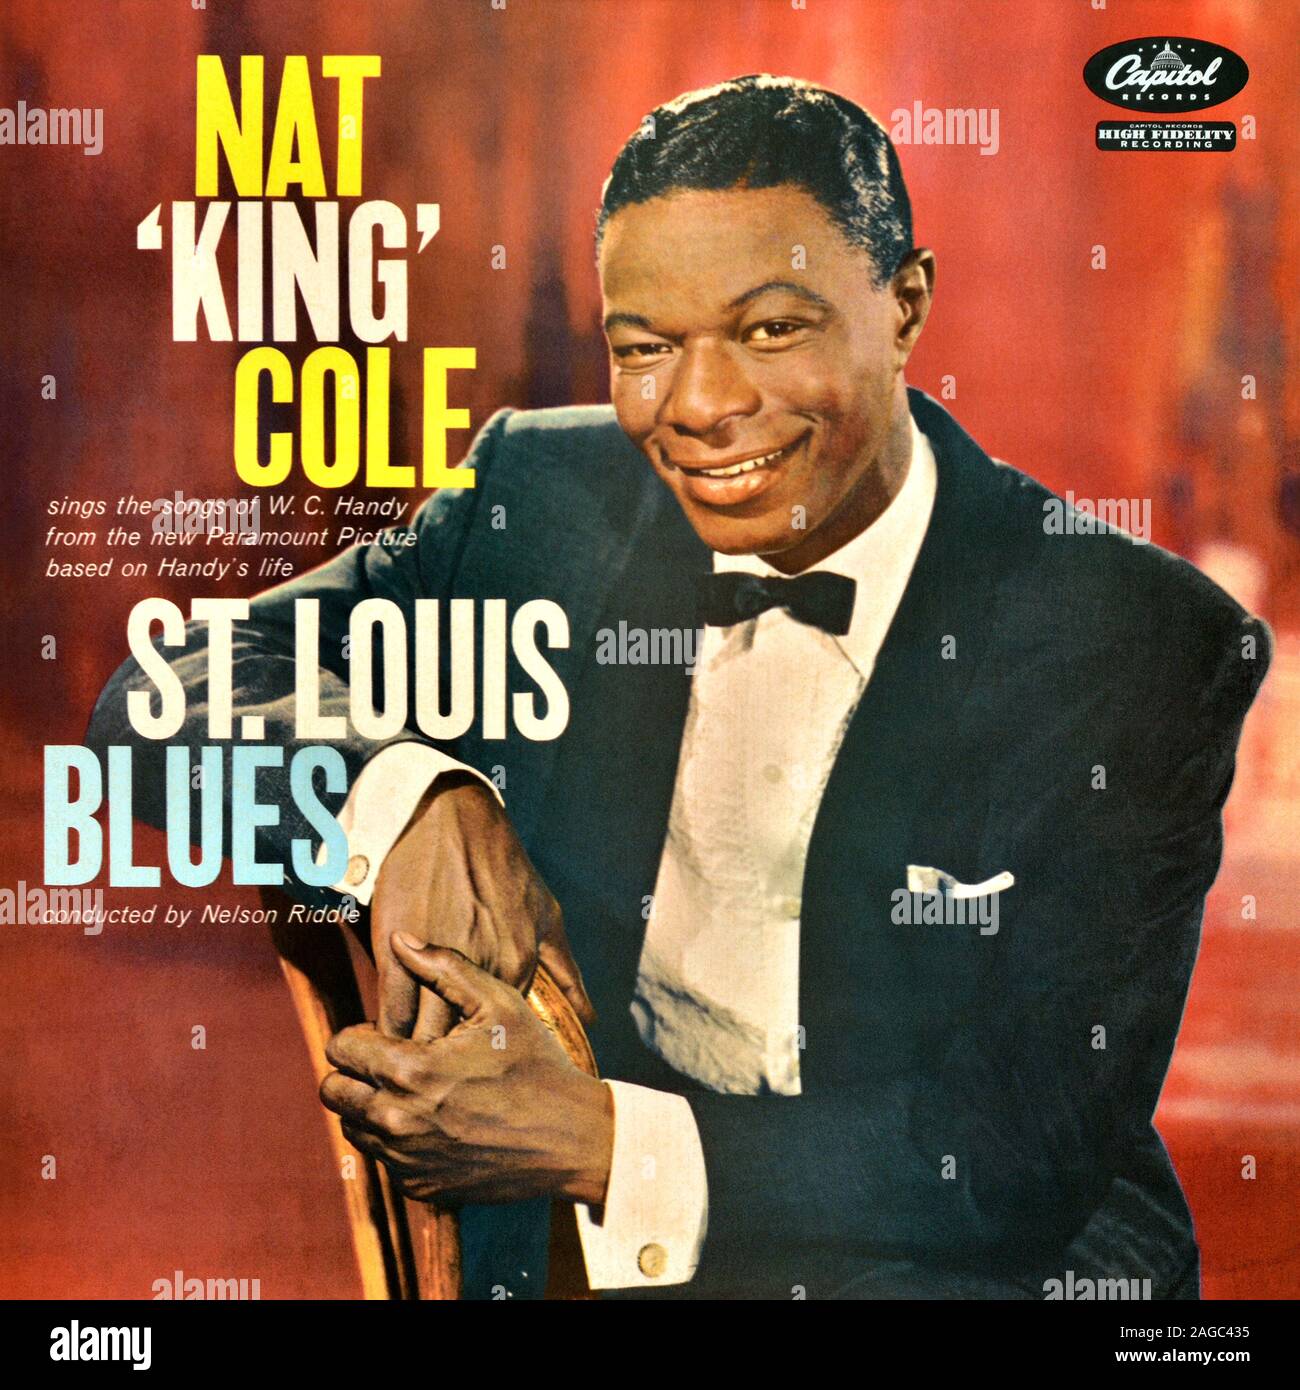 NAT King Cole - copertina originale in vinile - St. Louis Blues - 1958 Foto Stock